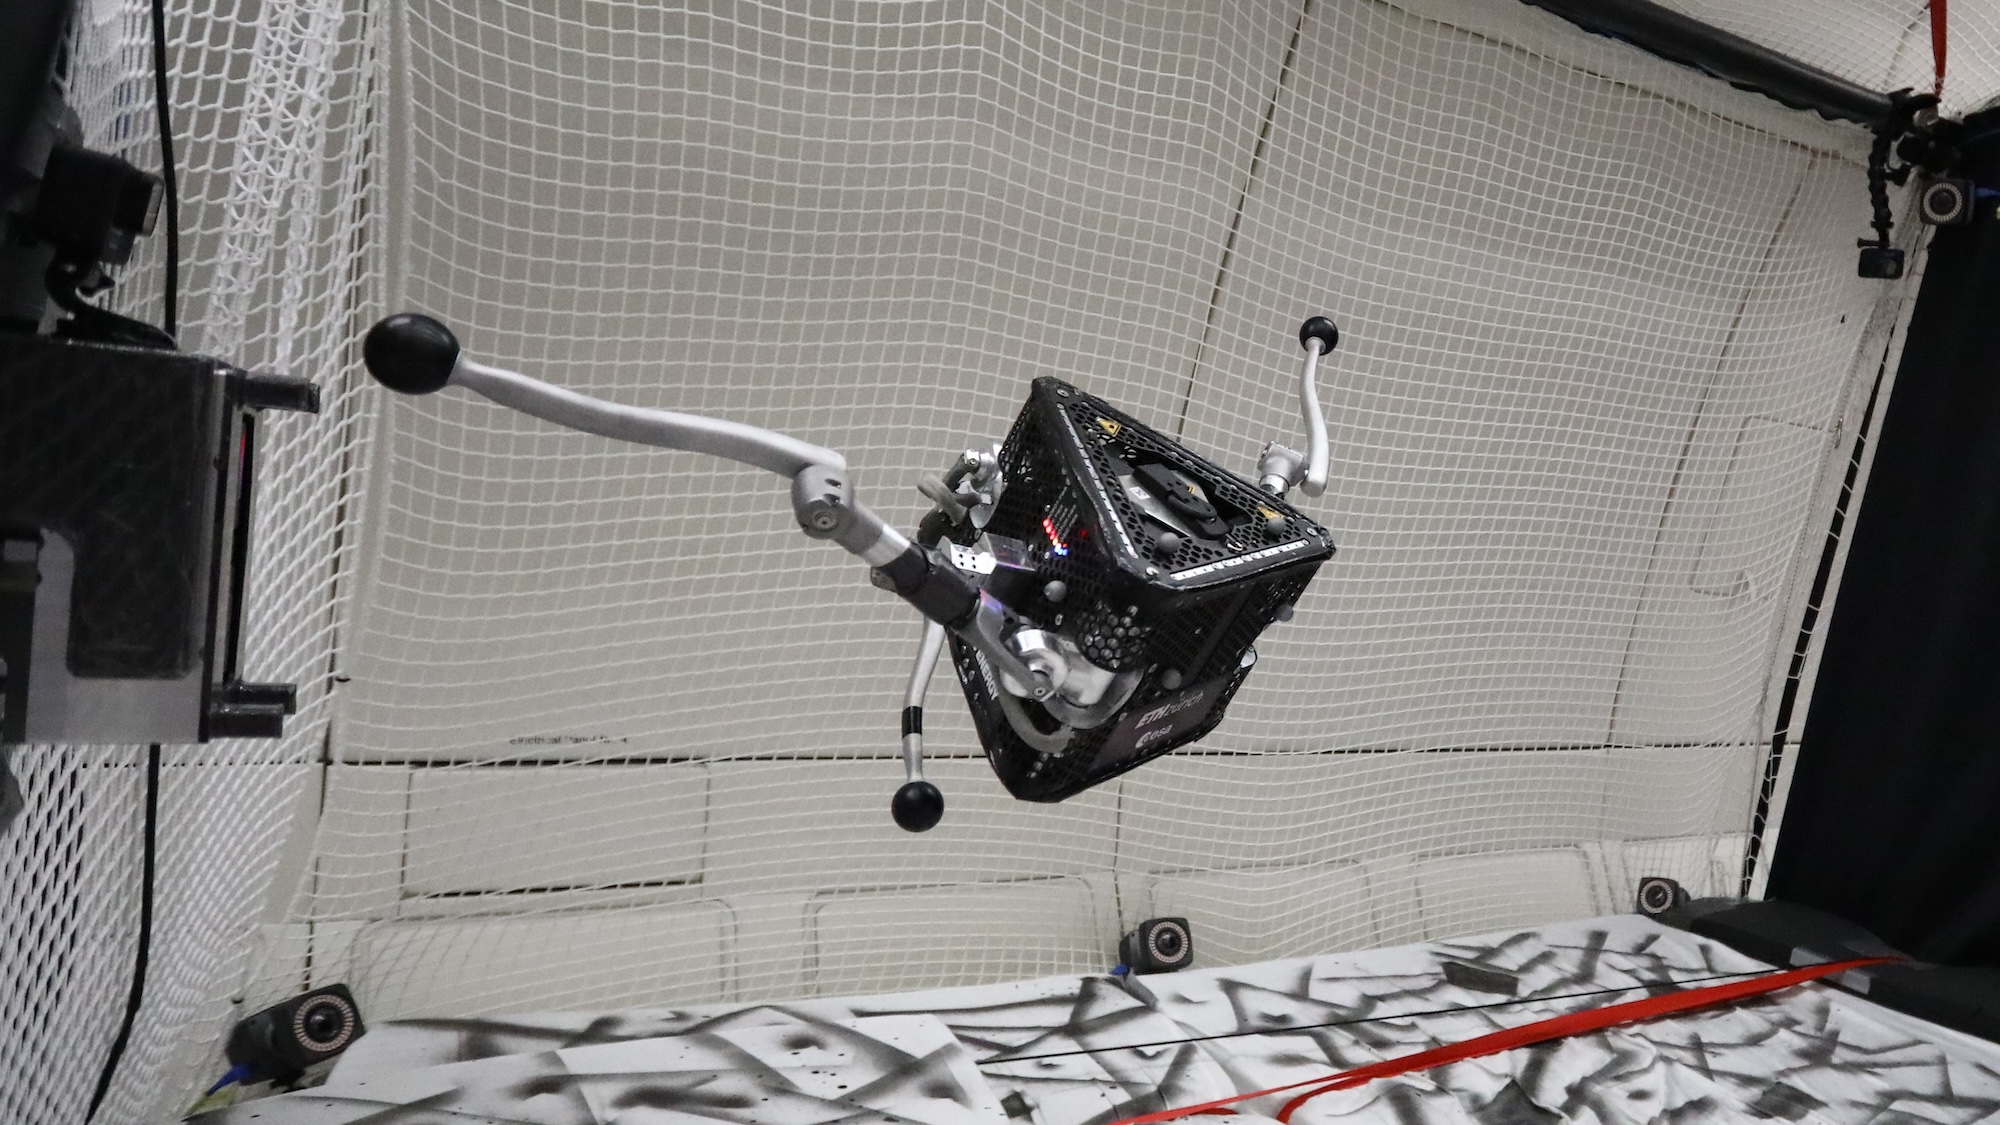 SpaceHopper robot in midair during parabolic flight test